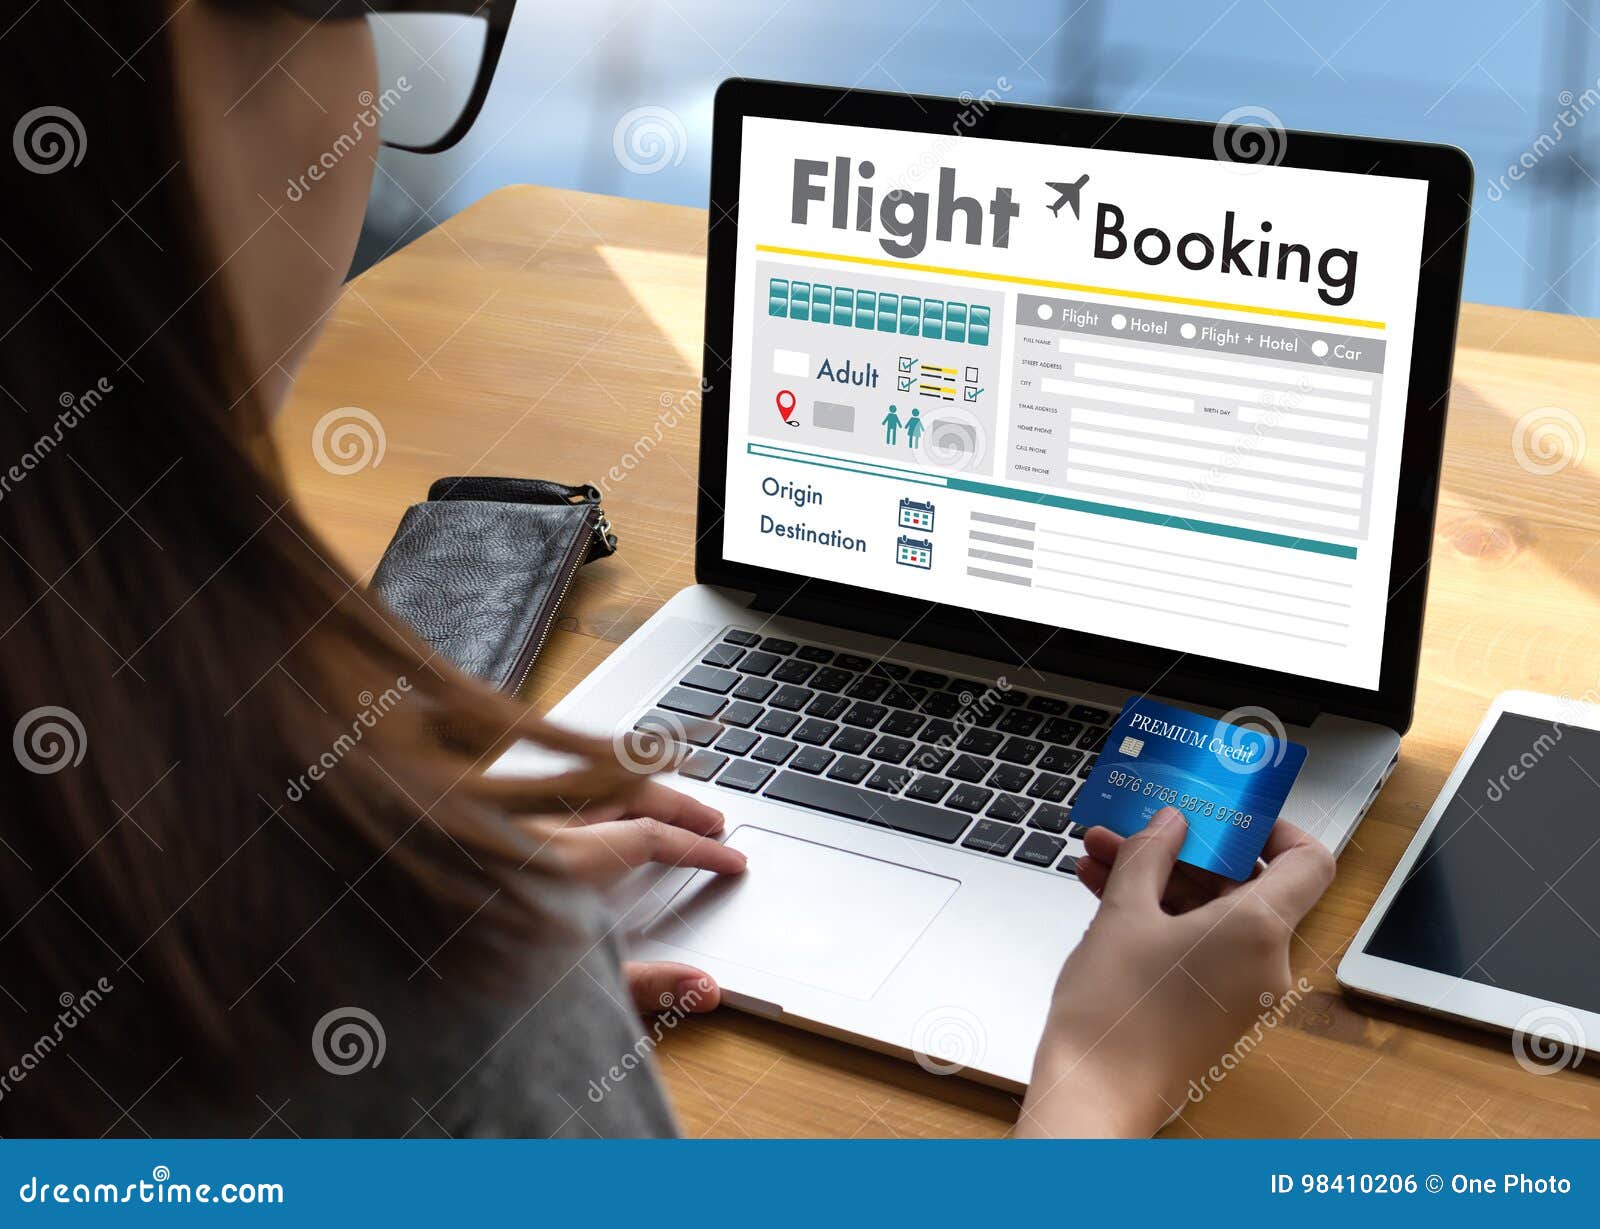 go flight booking air online ticket book concept